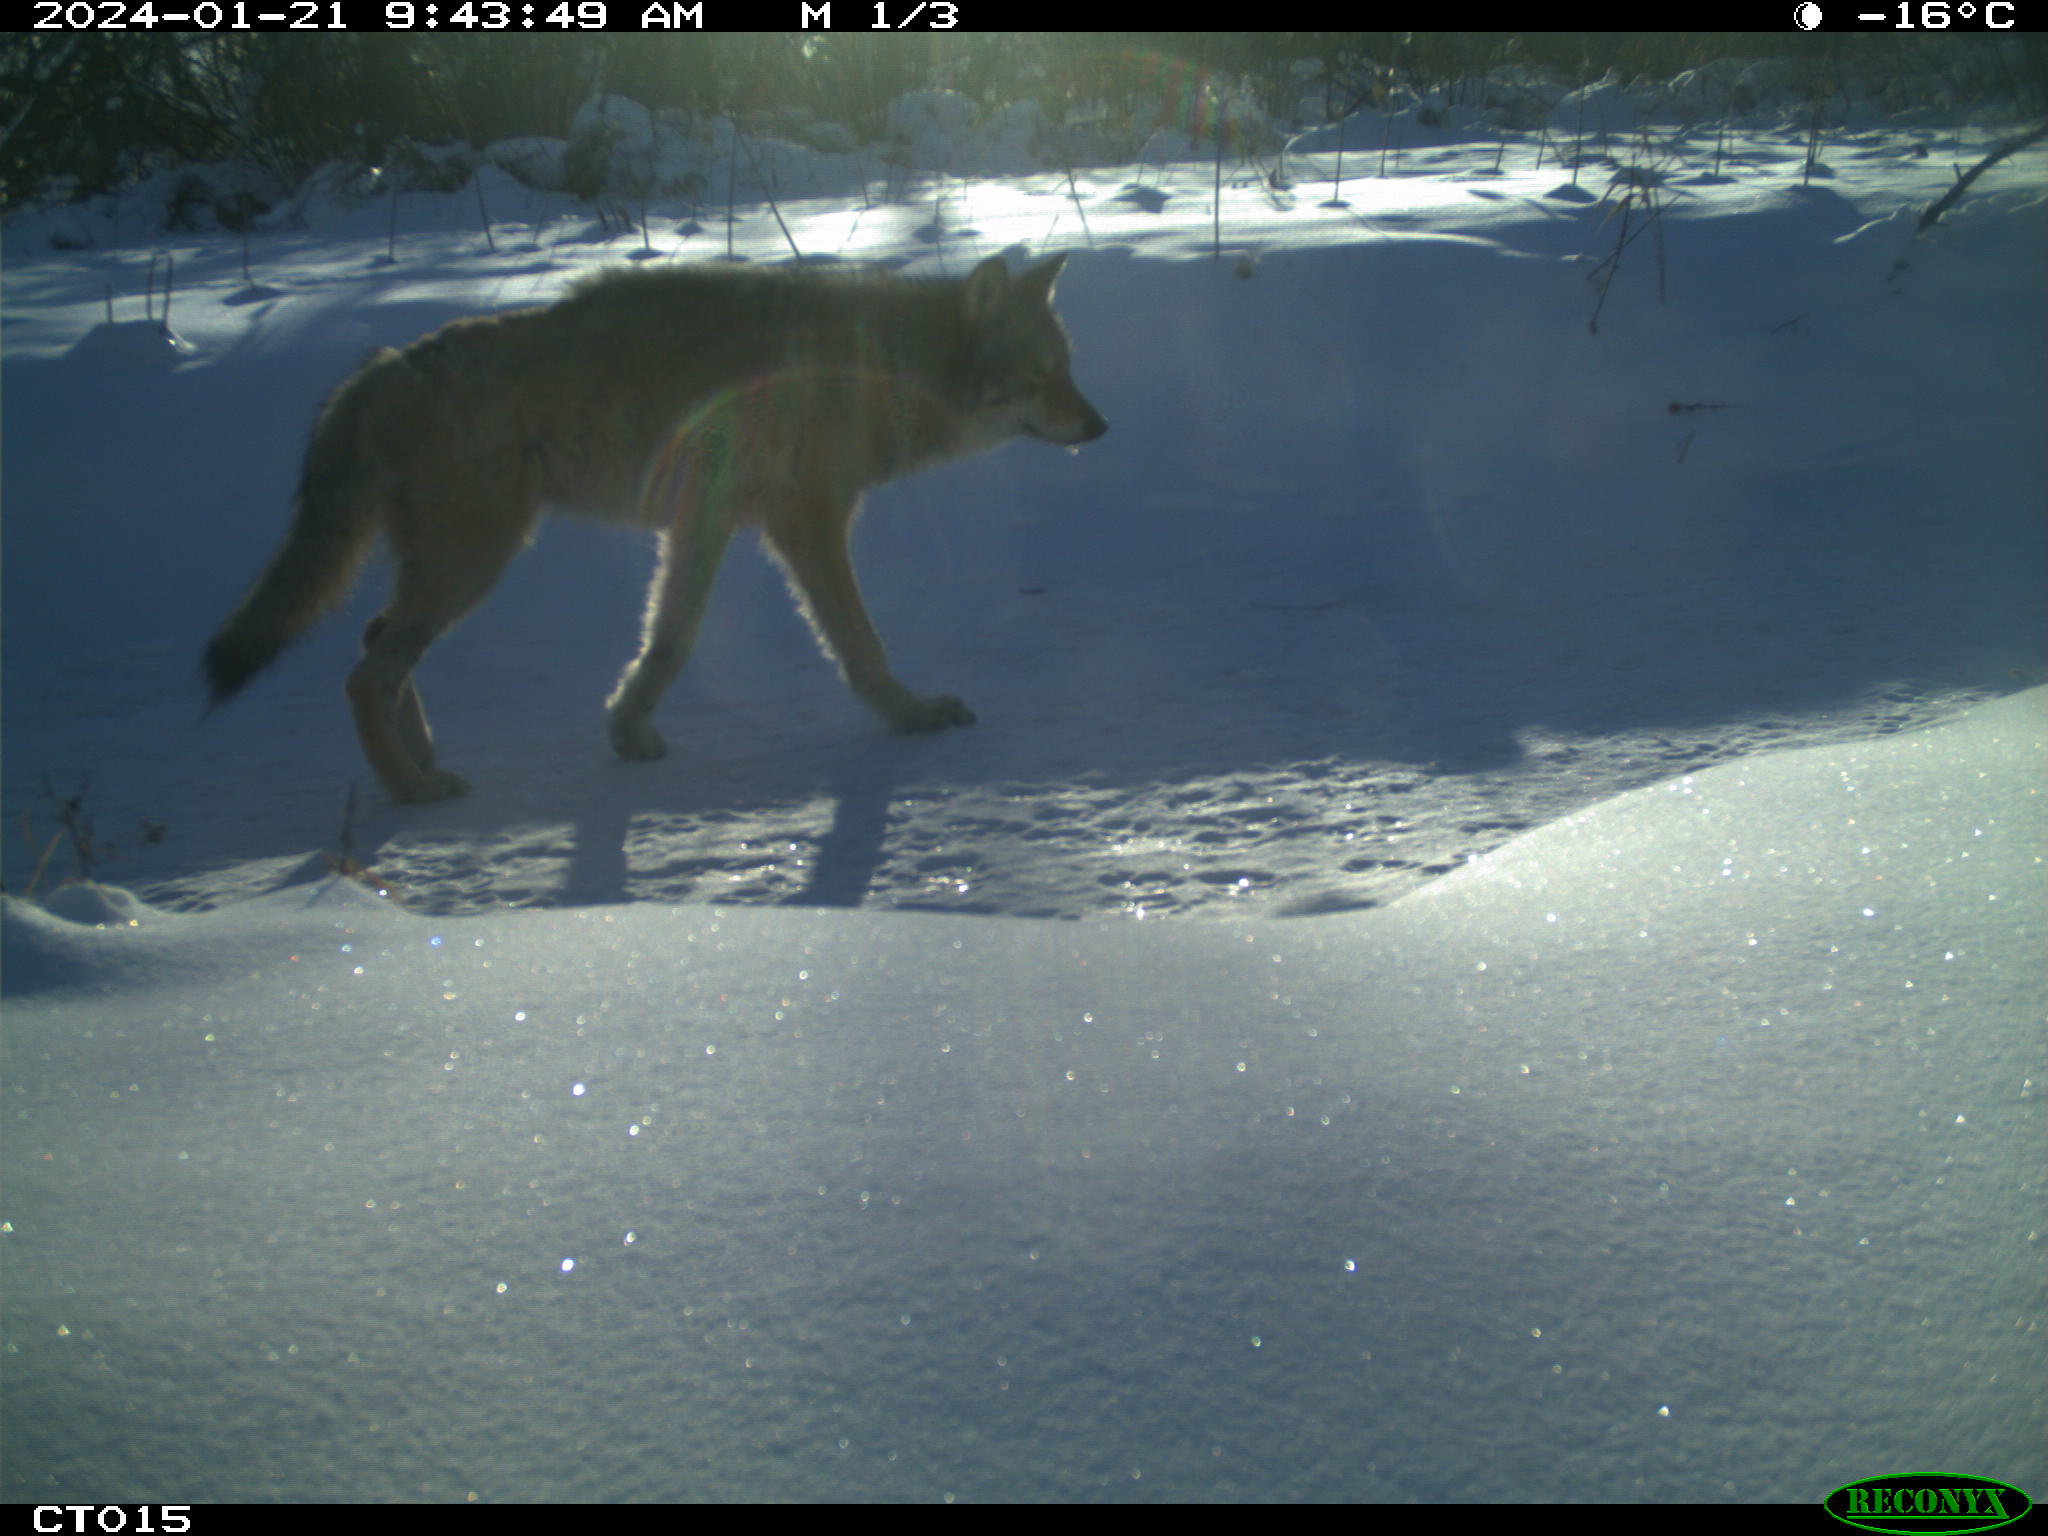 A Wolf walking through snow